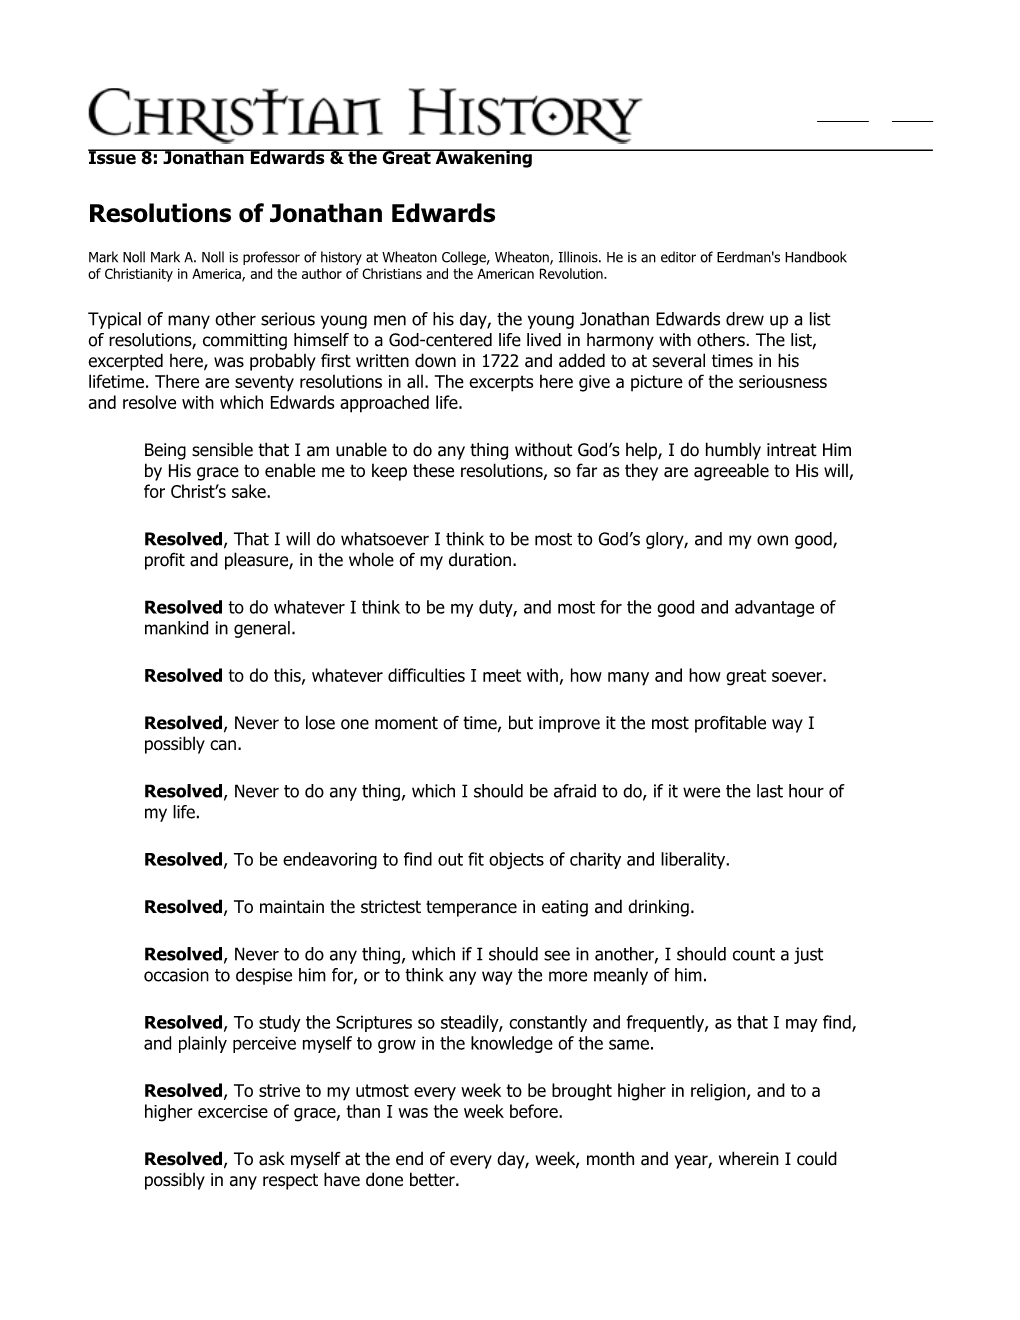 Resolutions of Jonathan Edwards